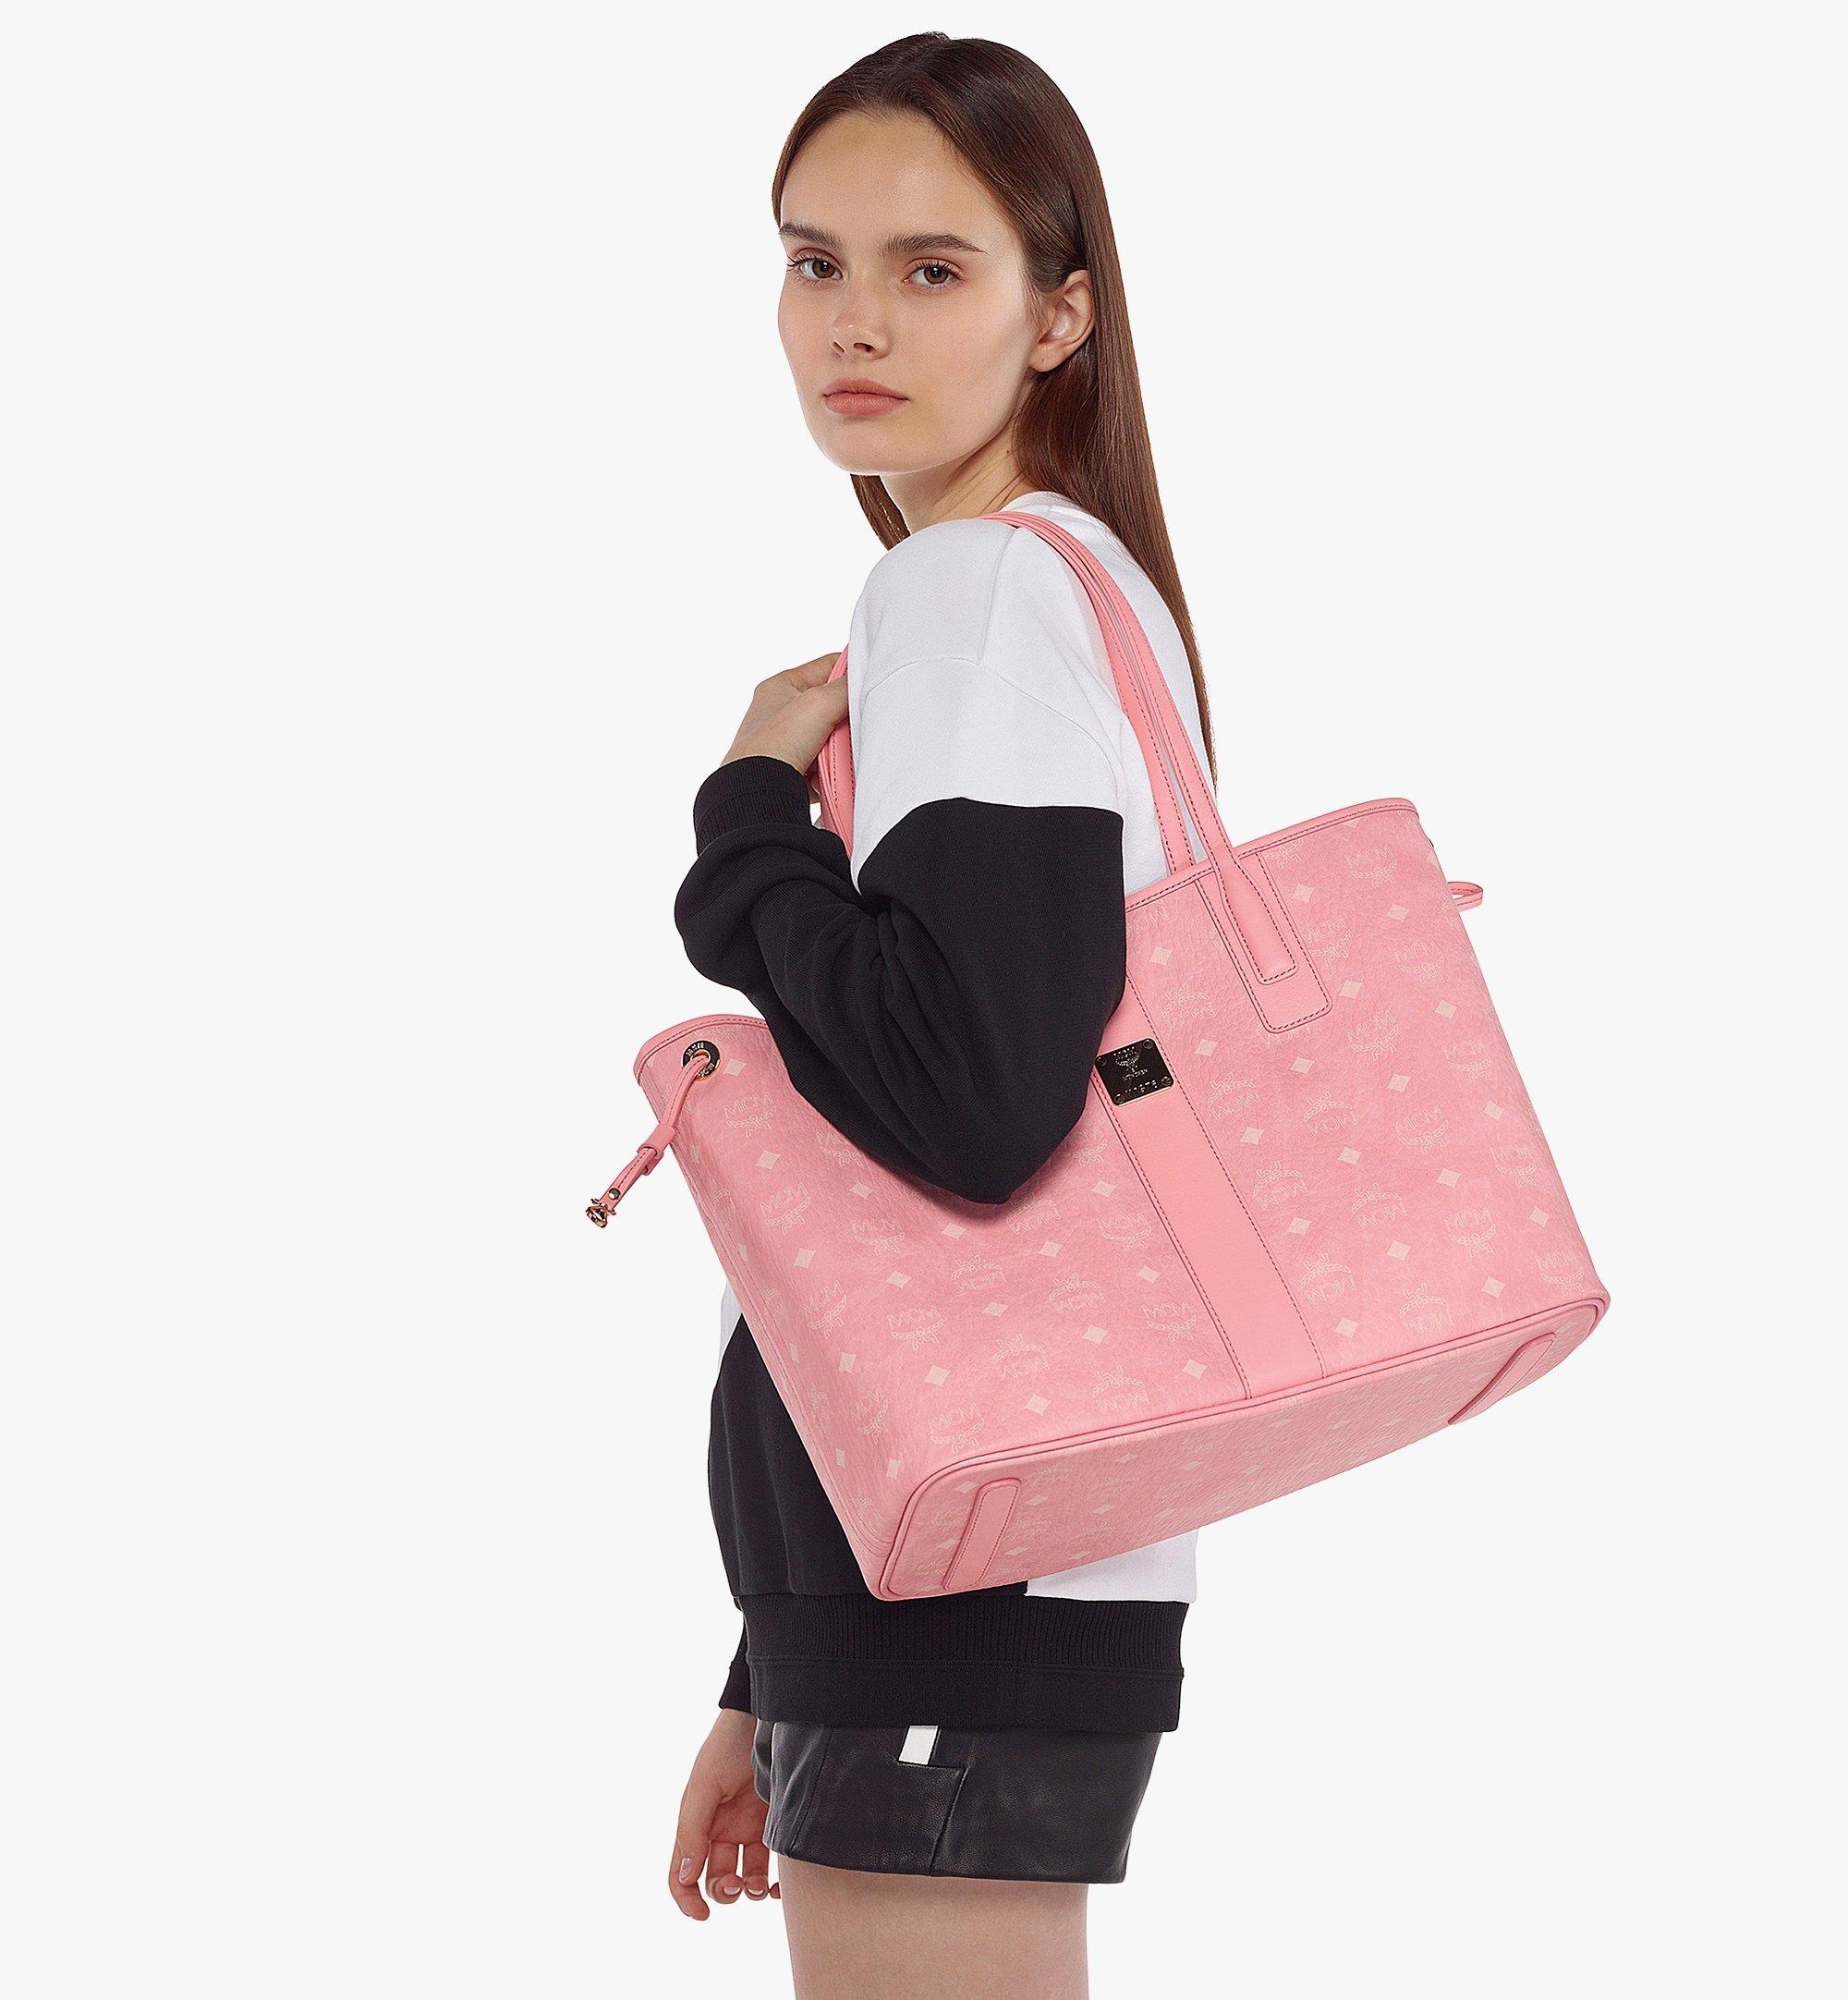 Mcm Women's Small Liz Reversible Visetos Tote Bag - Pink Blossom